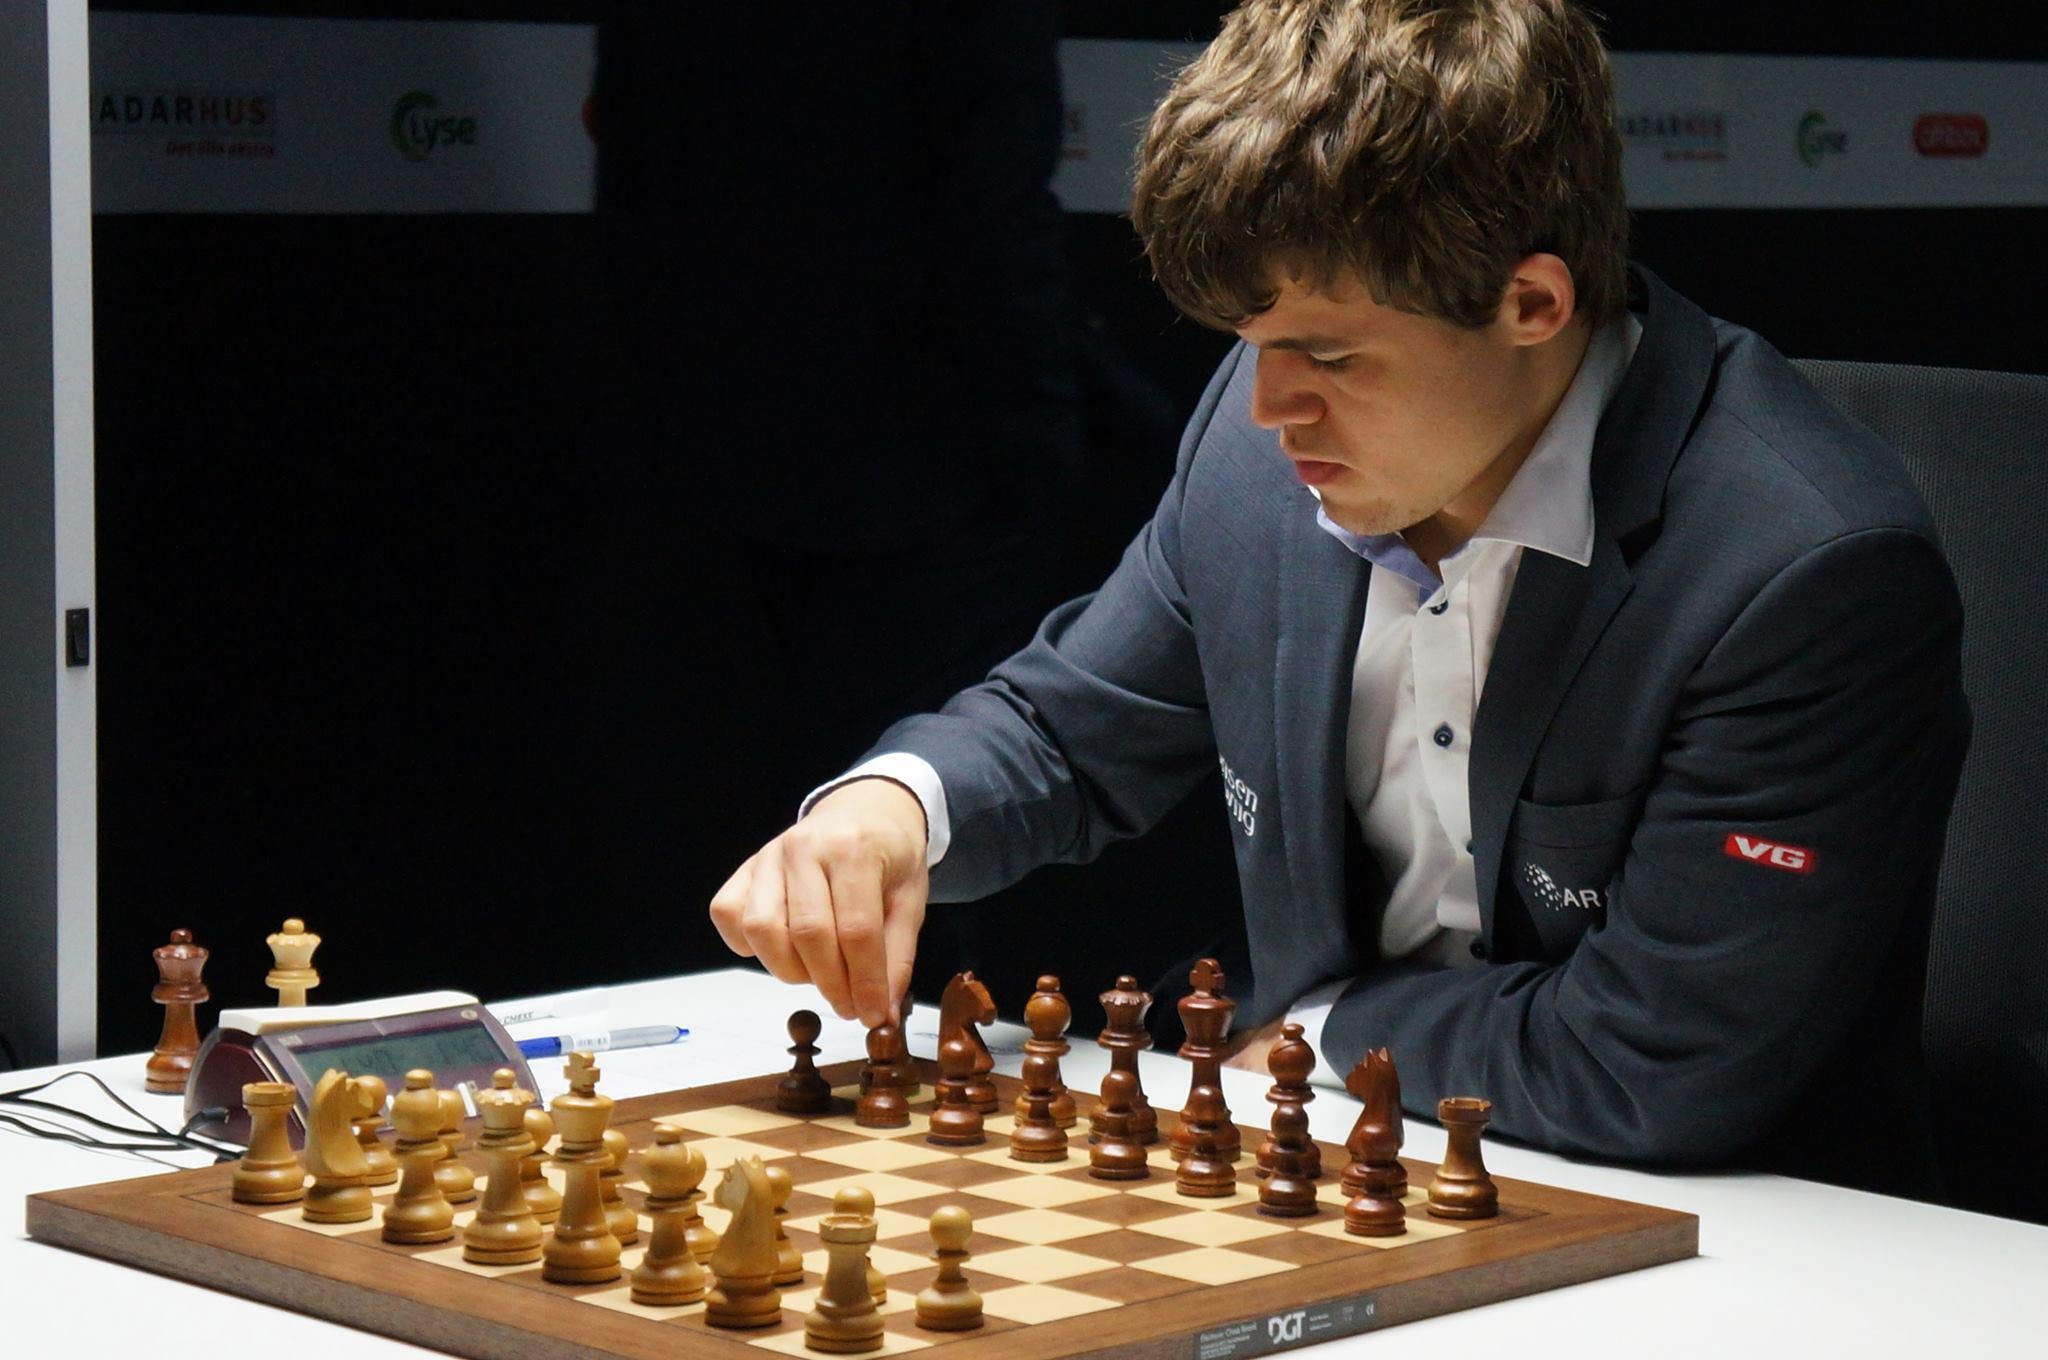 Torneo Norway Chess de ajedrez: Carlsen sufre su mayor fracaso